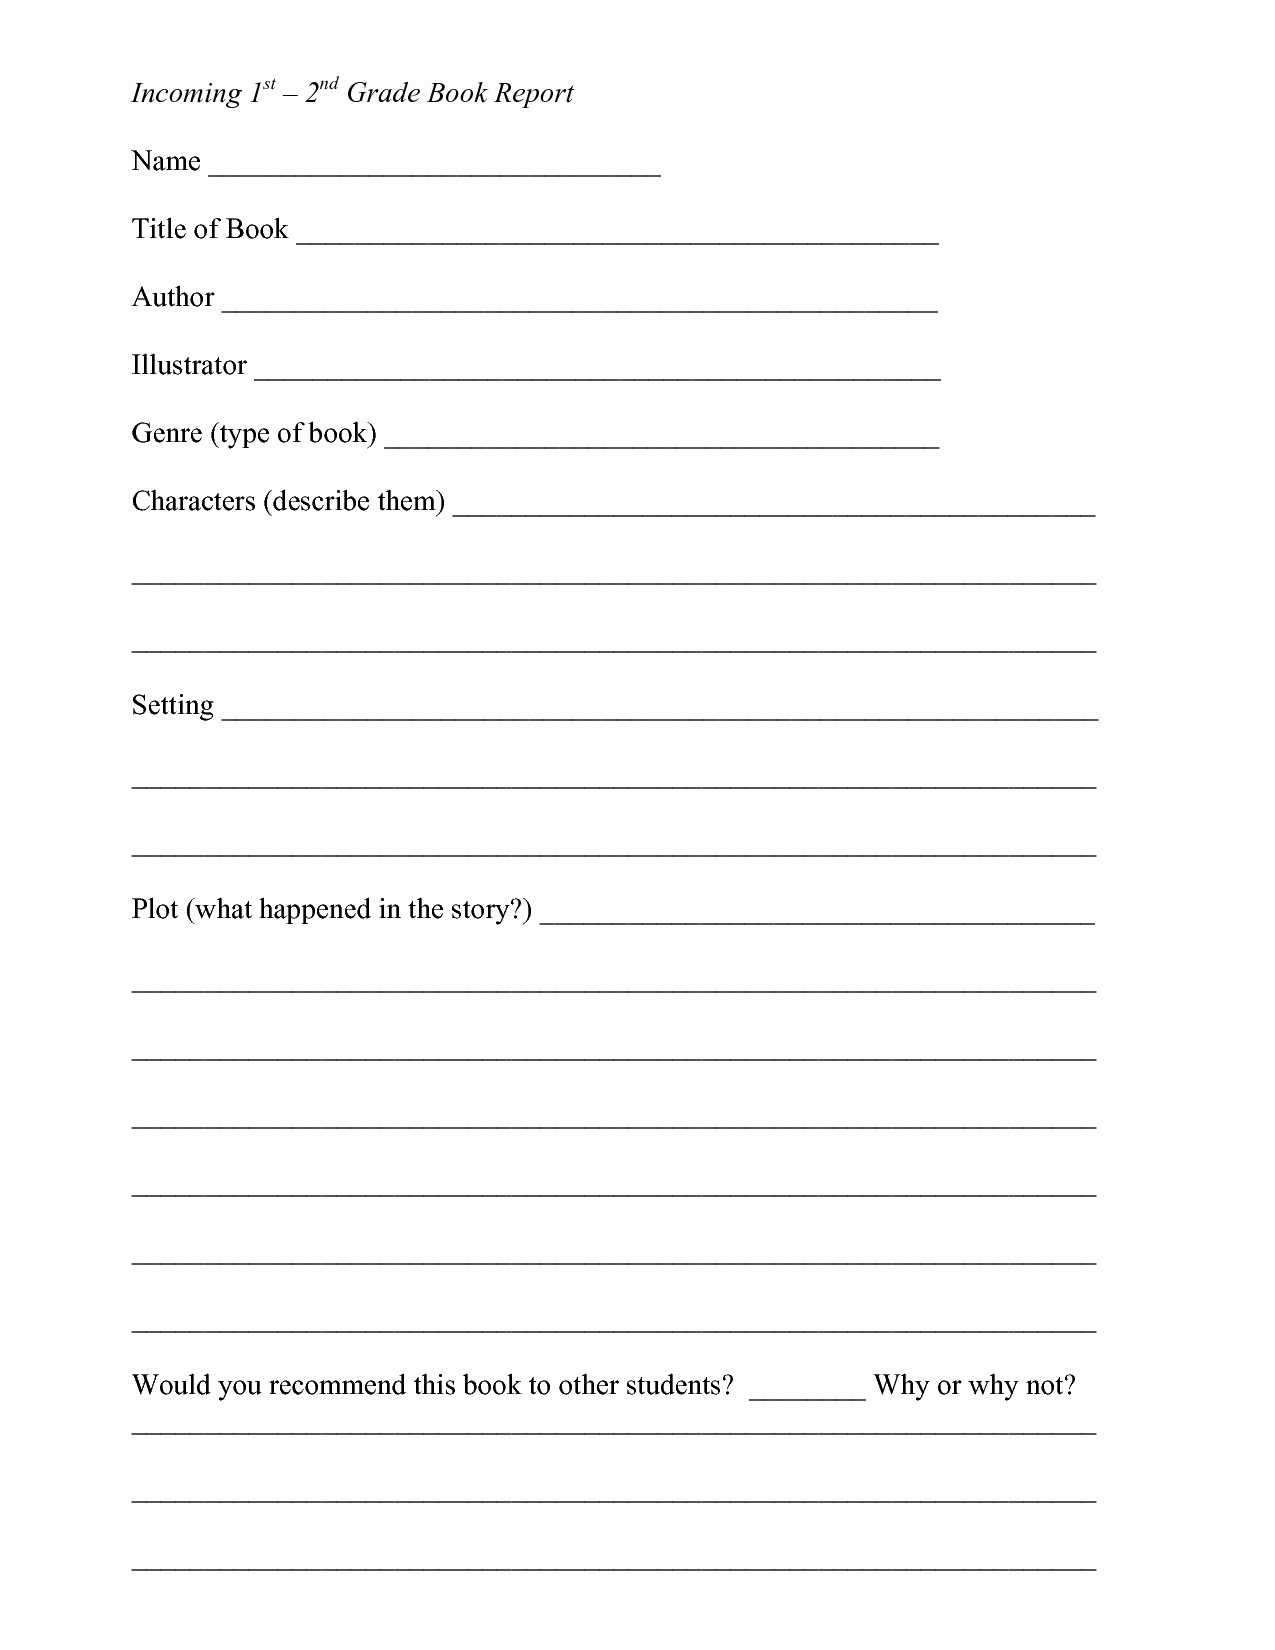 1St Grade Book Report Worksheets | Printable Worksheets And Throughout 1St Grade Book Report Template